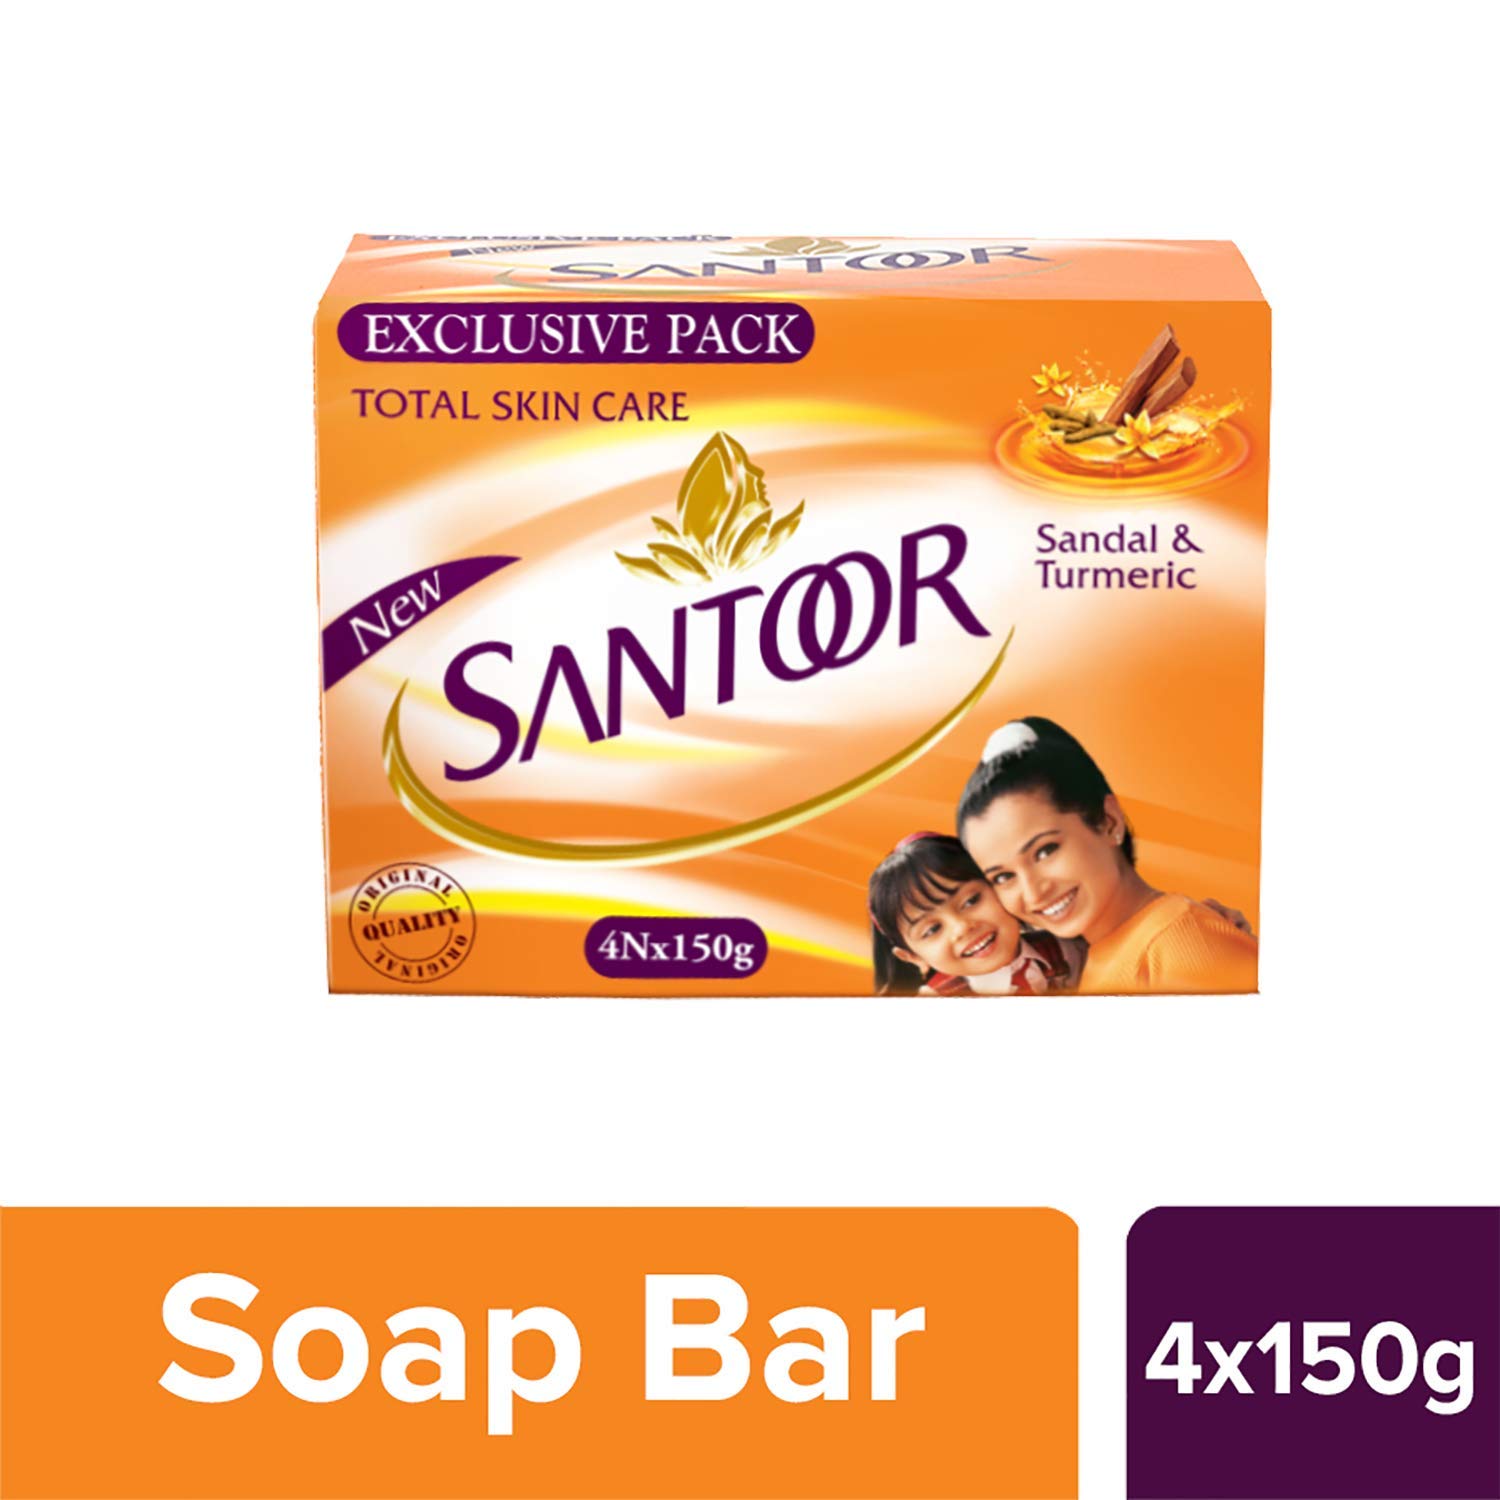 Santoor Sandal & Turmeric Soap for Total Skin Care, 150g